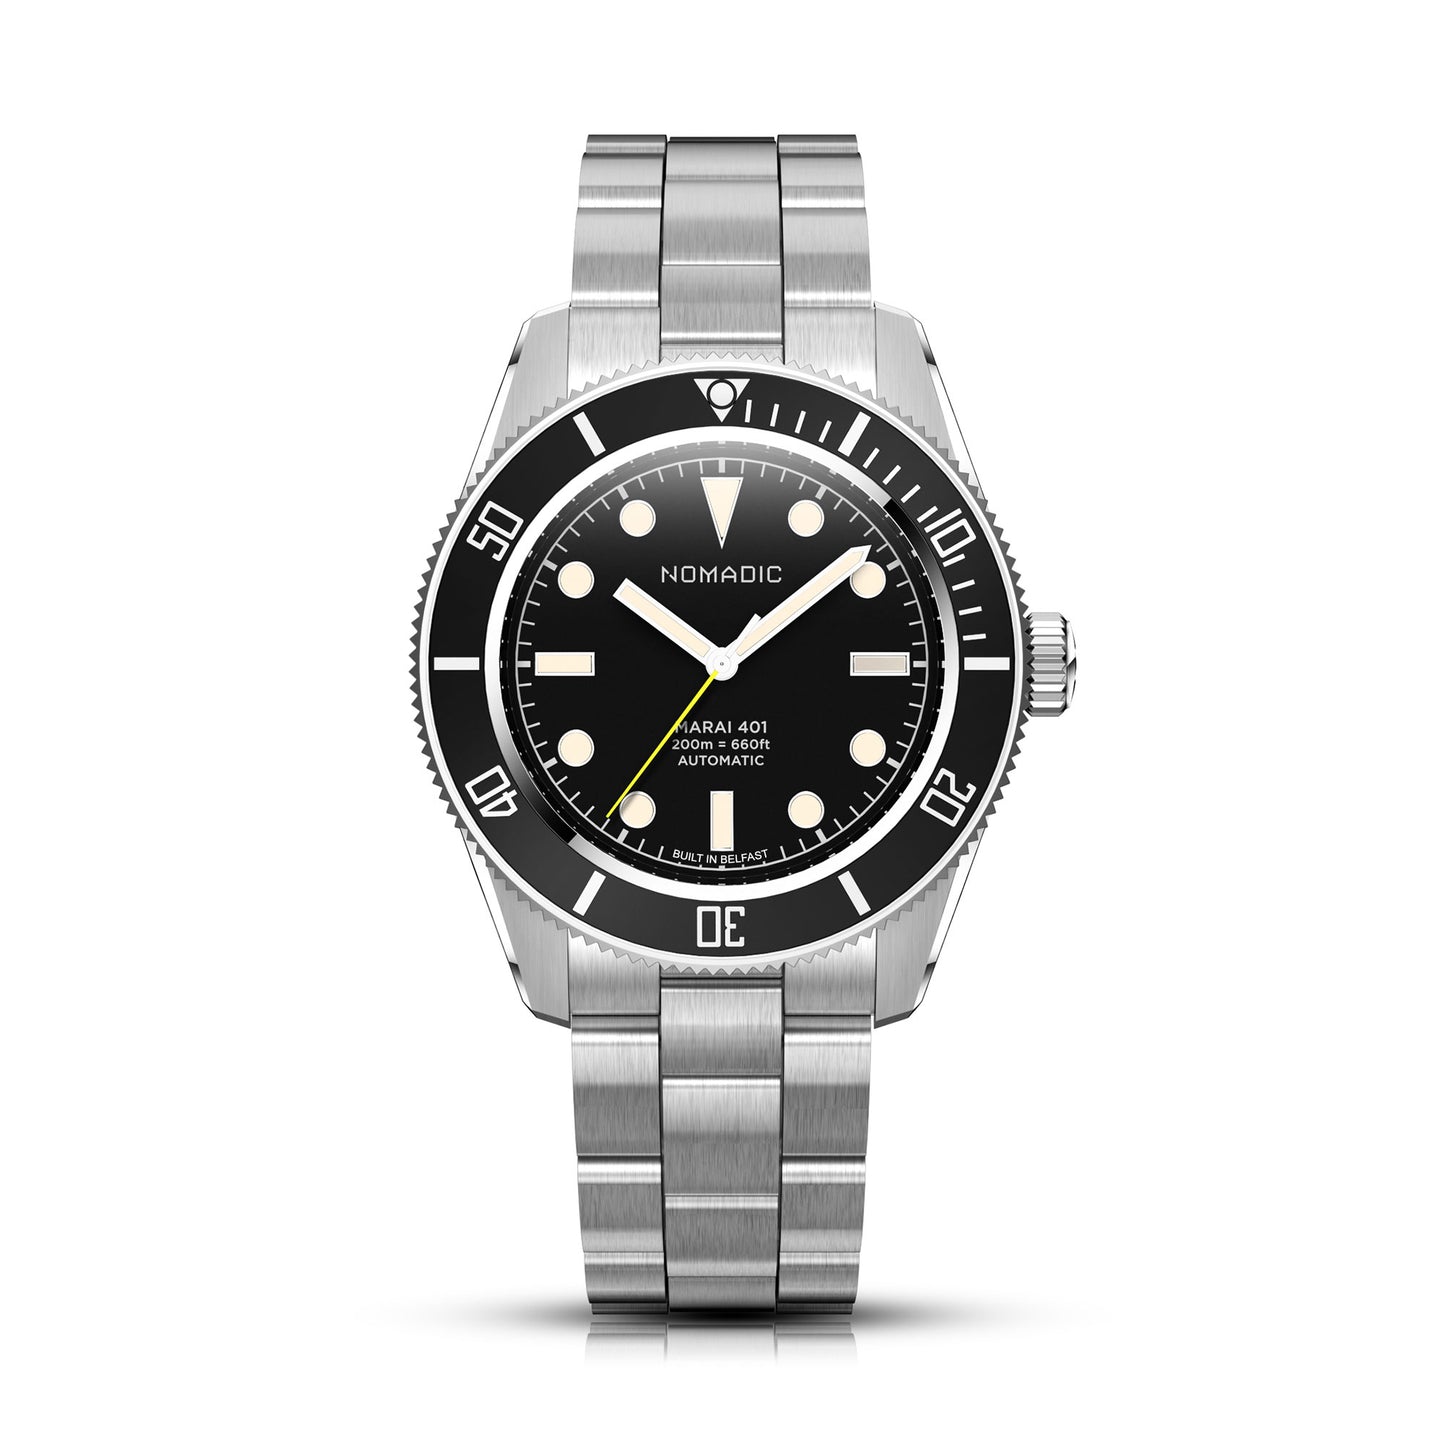 Pitch Black - Maraí 401 - Dive Watch